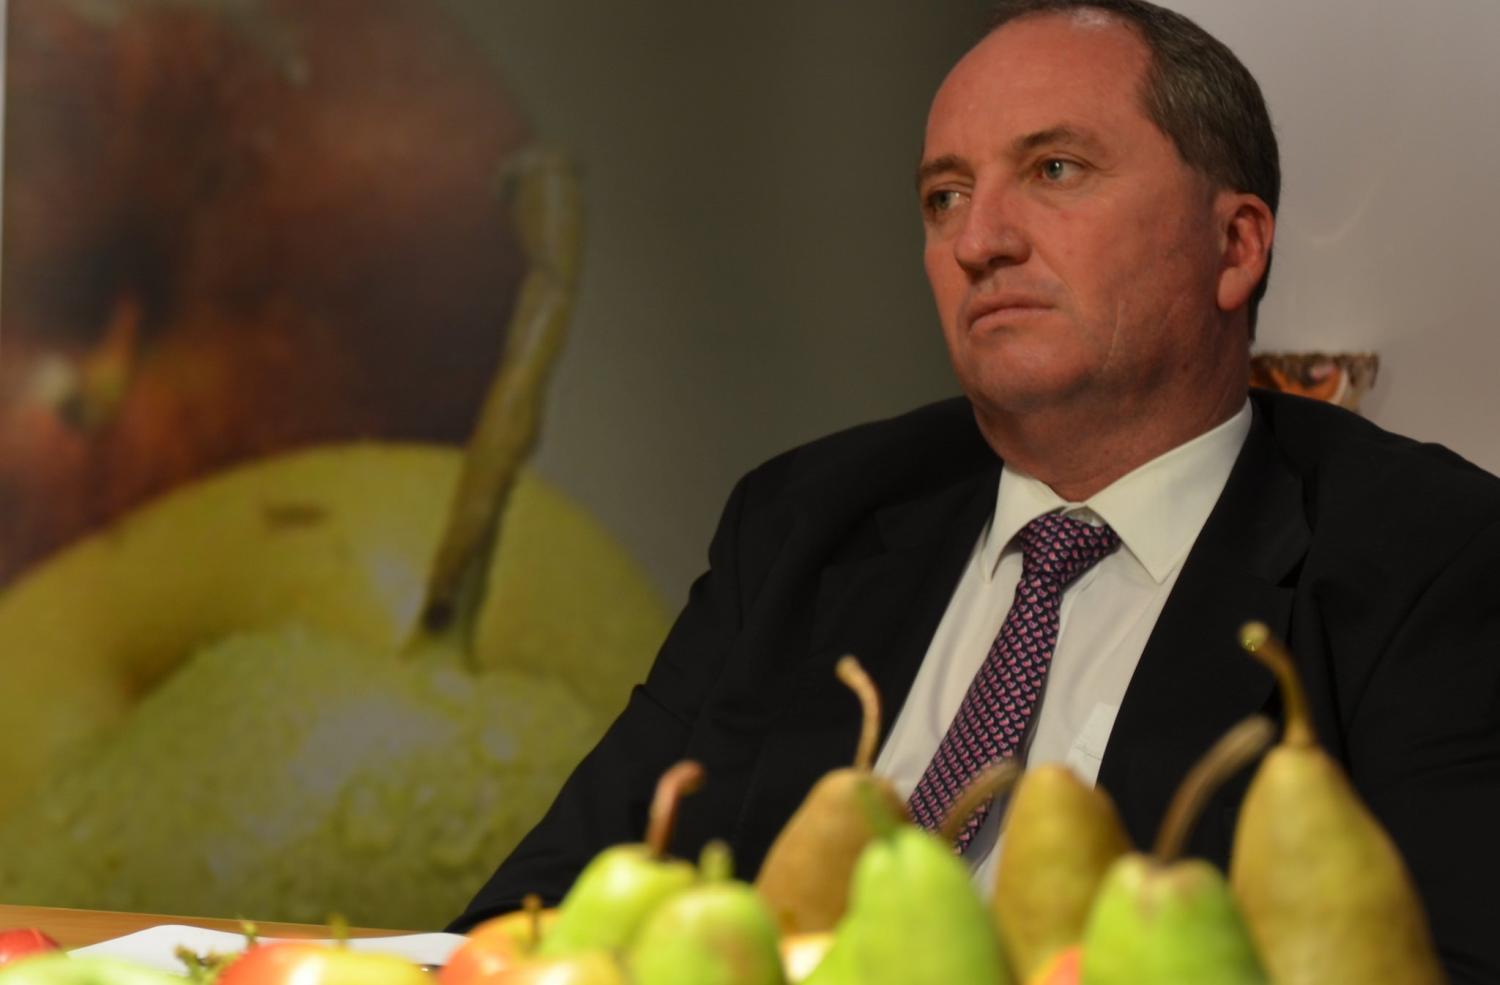 Barnaby Joyce in 2014. (Flickr/Apple and Pear Australia)